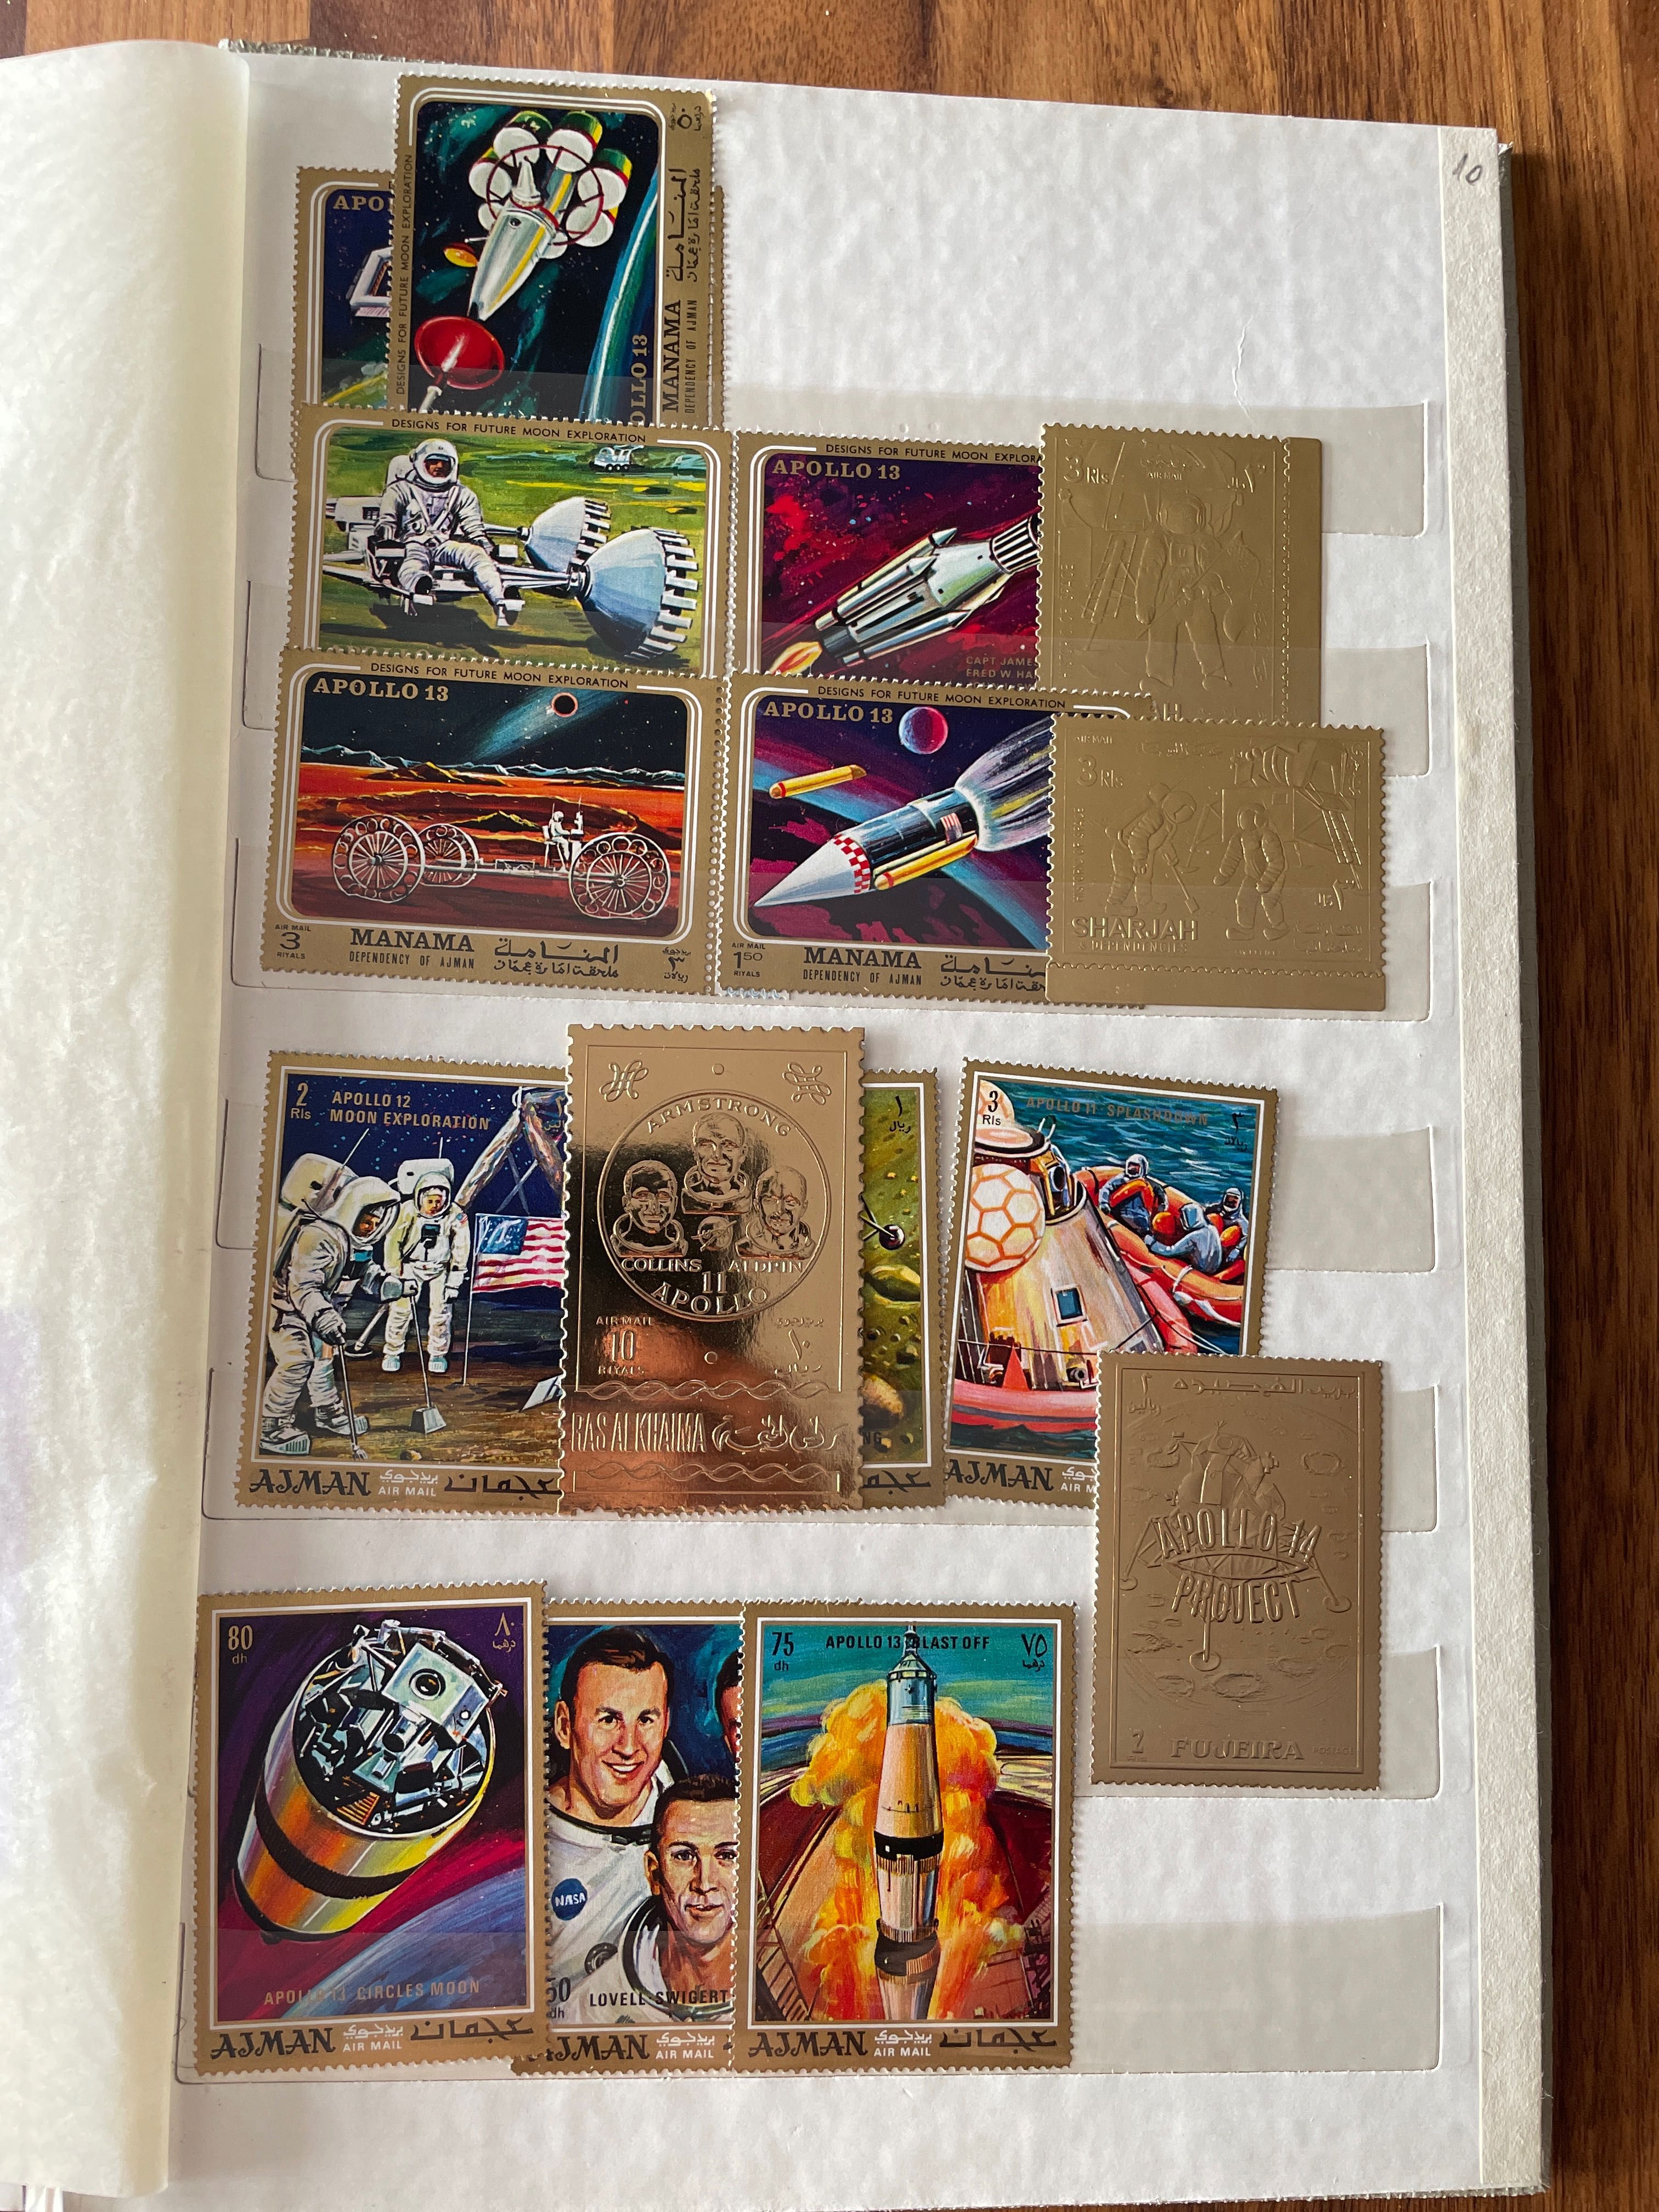 Colectie de peste 8000 de timbre rare in conditie exceptionala, mint